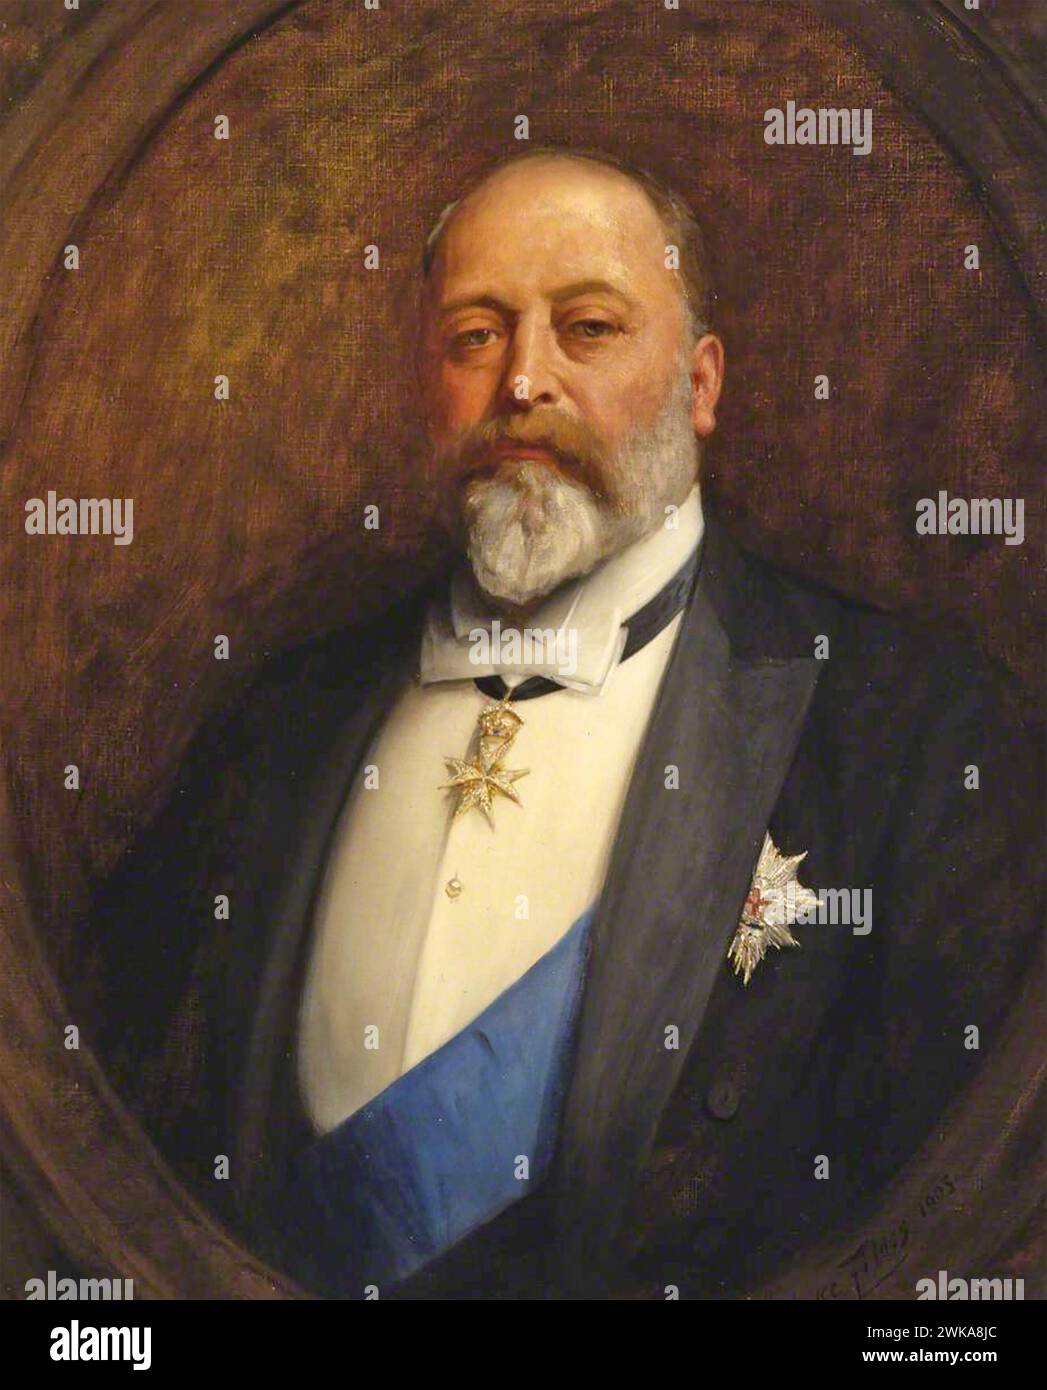 RE EDOARDO VII (1841-1910) monarca britannico intorno al 1902. Foto Stock